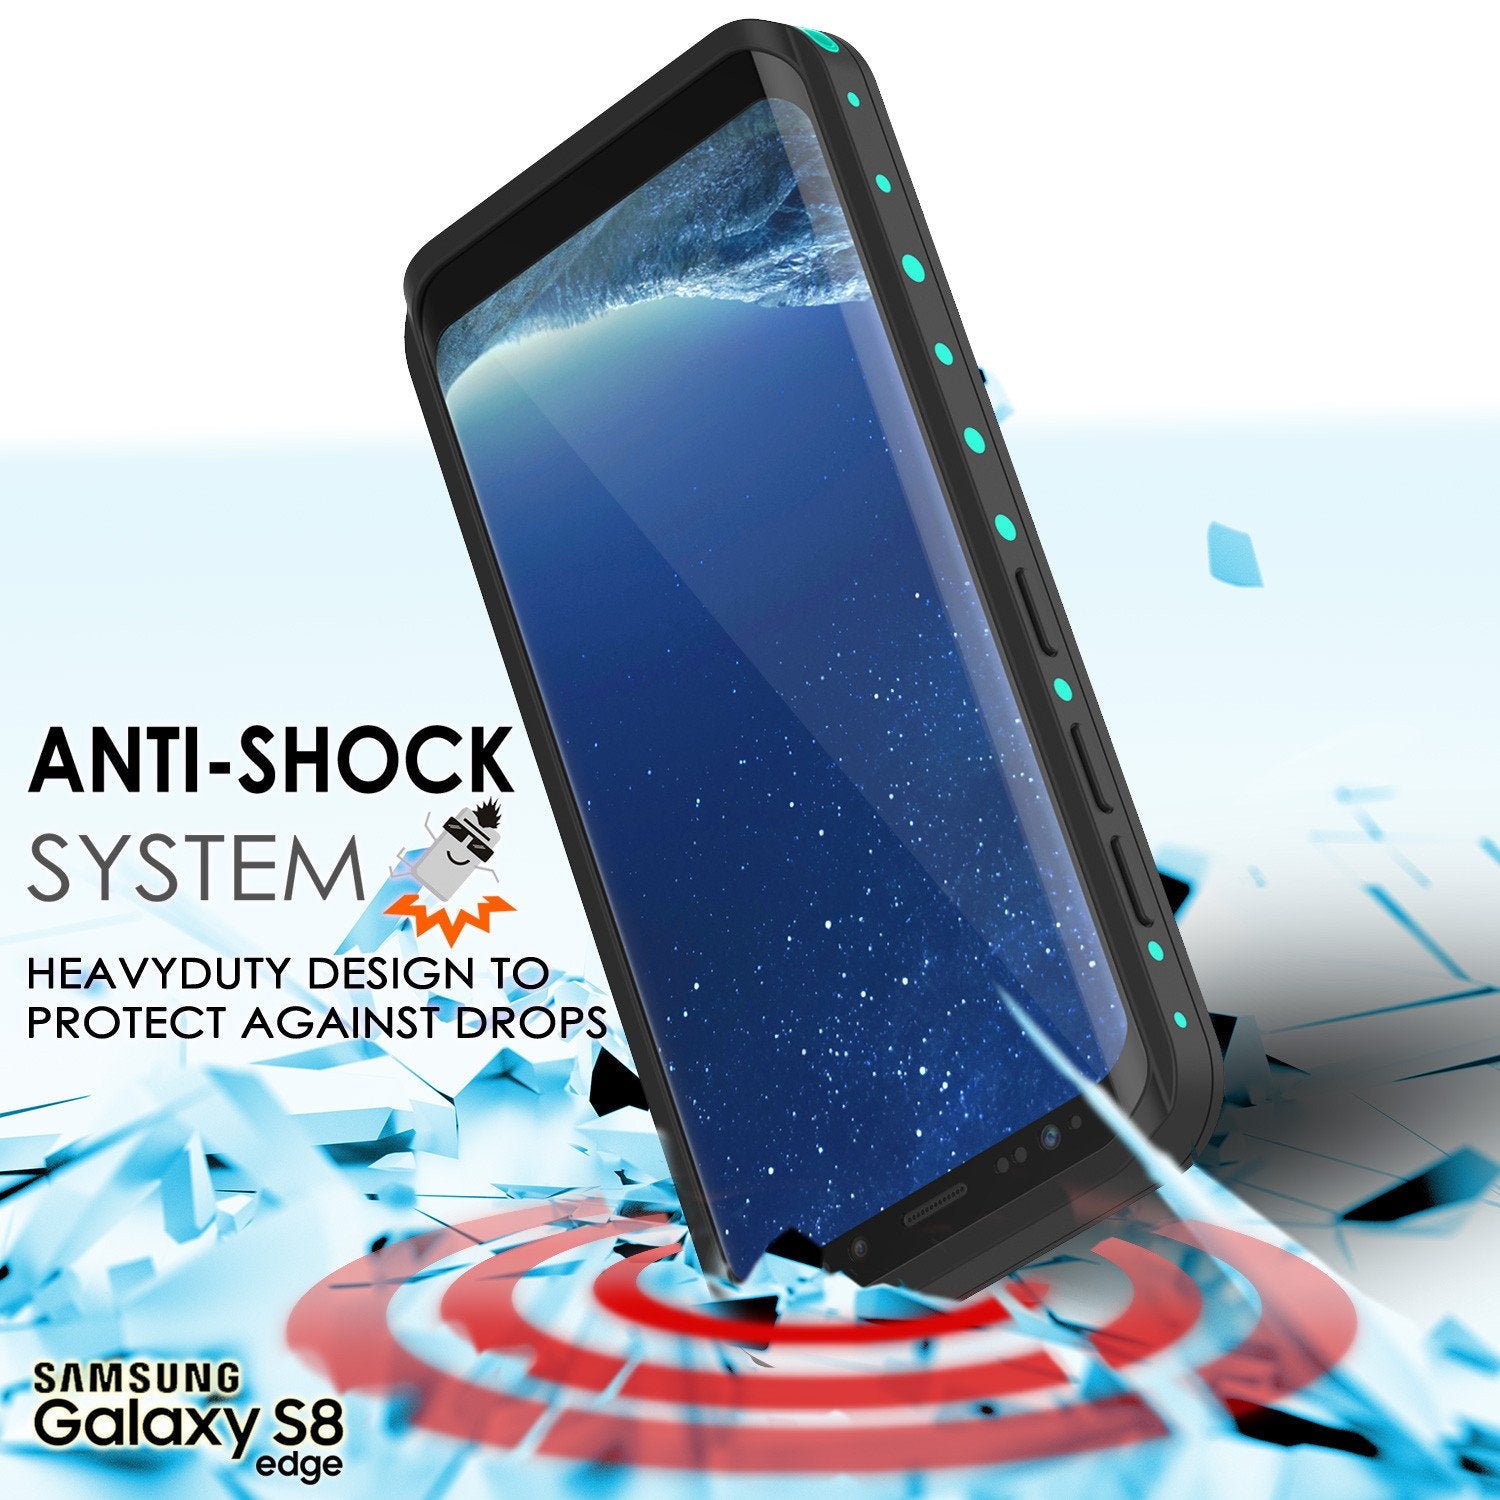 Galaxy S8 Waterproof Case PunkCase StudStar Teal Thin 6.6ft Underwater IP68 Shock/Snow Proof - PunkCase NZ